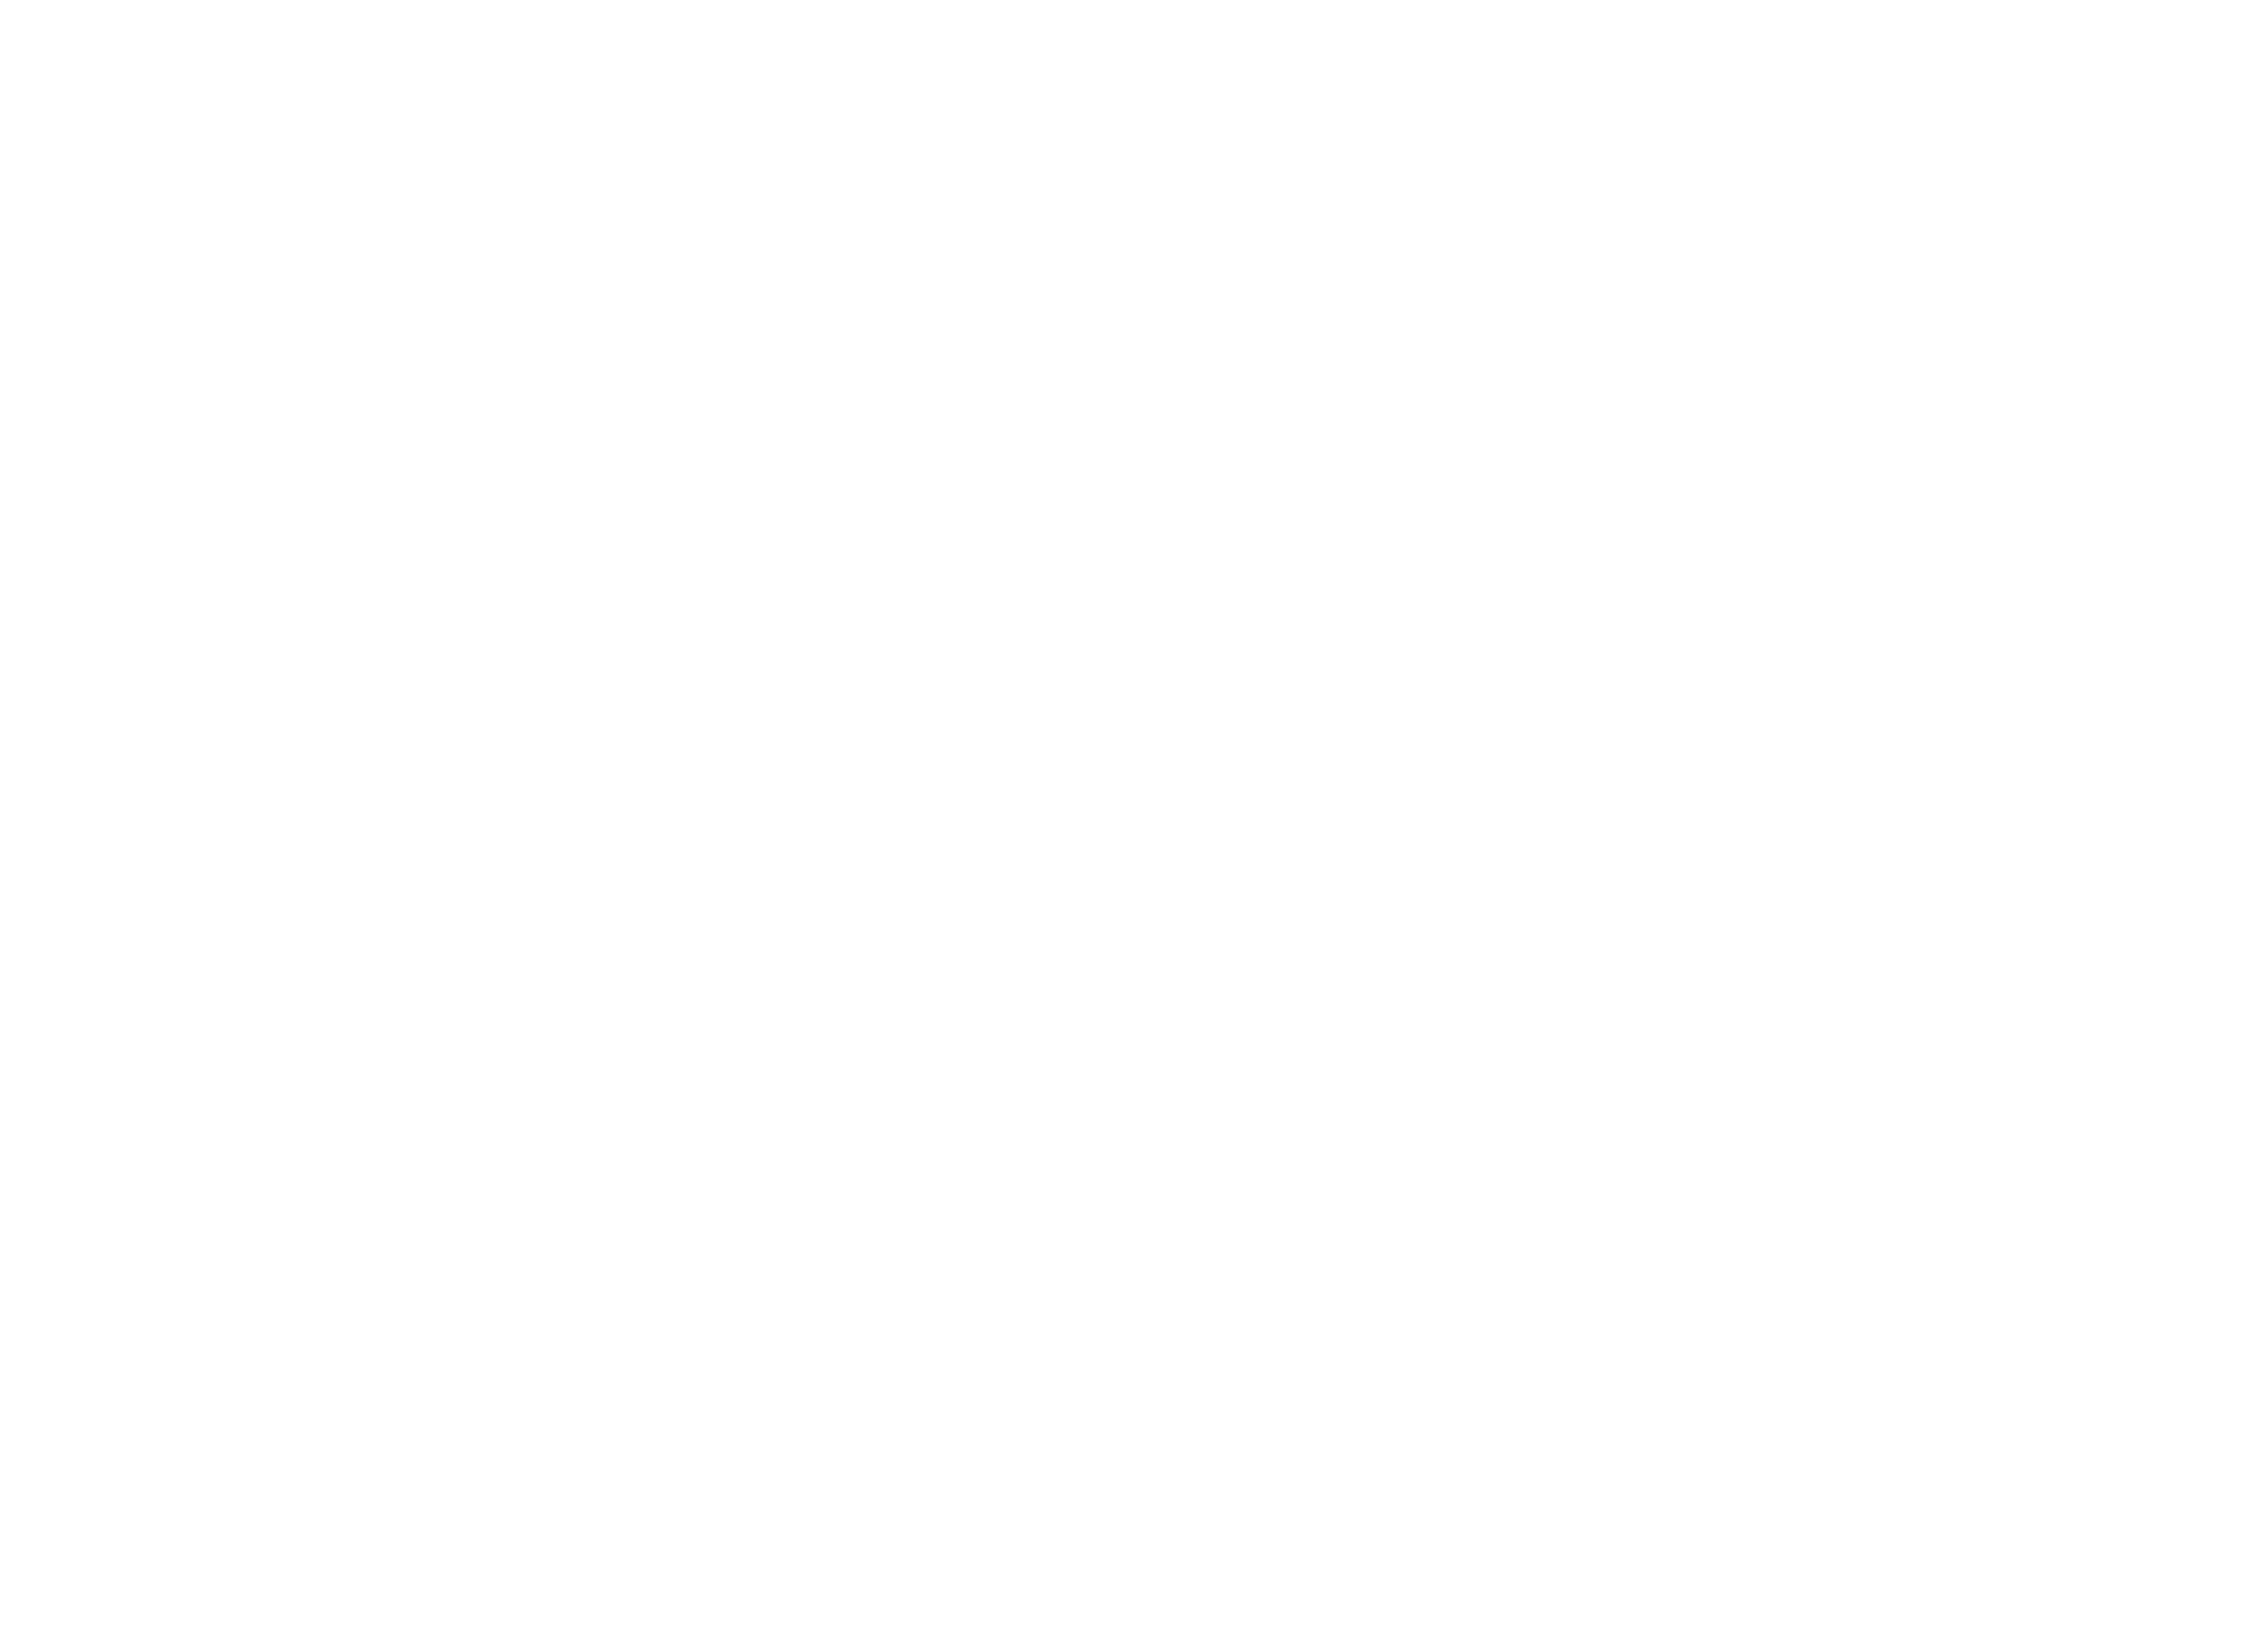 5th Orange Media